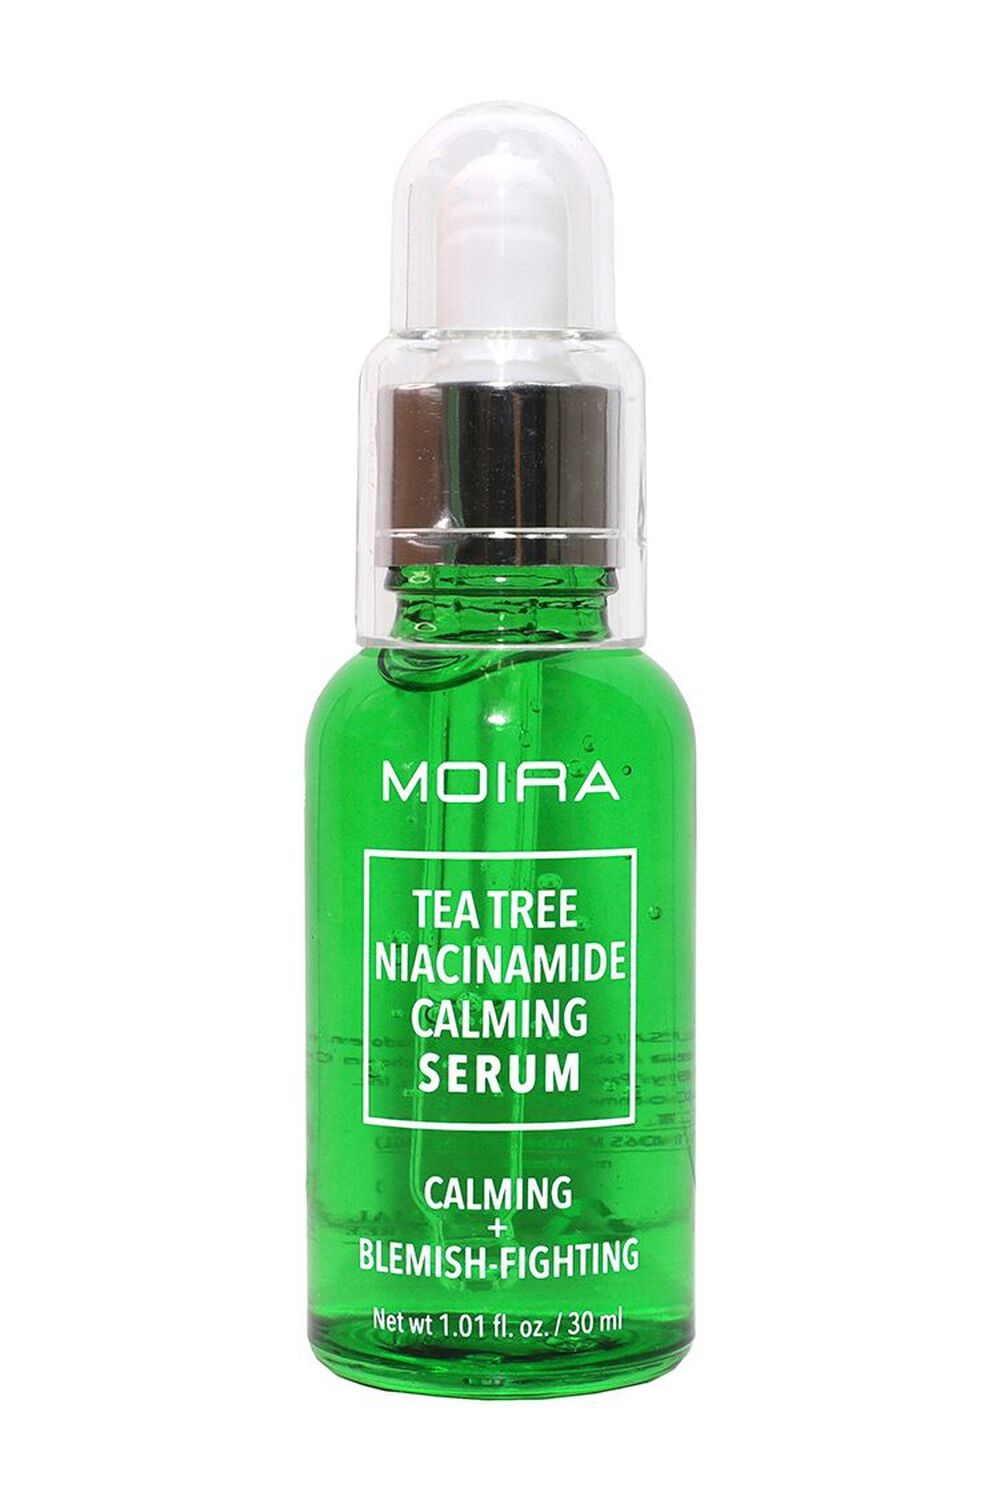 MOIRA Tea Tree Niacinamide Calming Serum, image 2